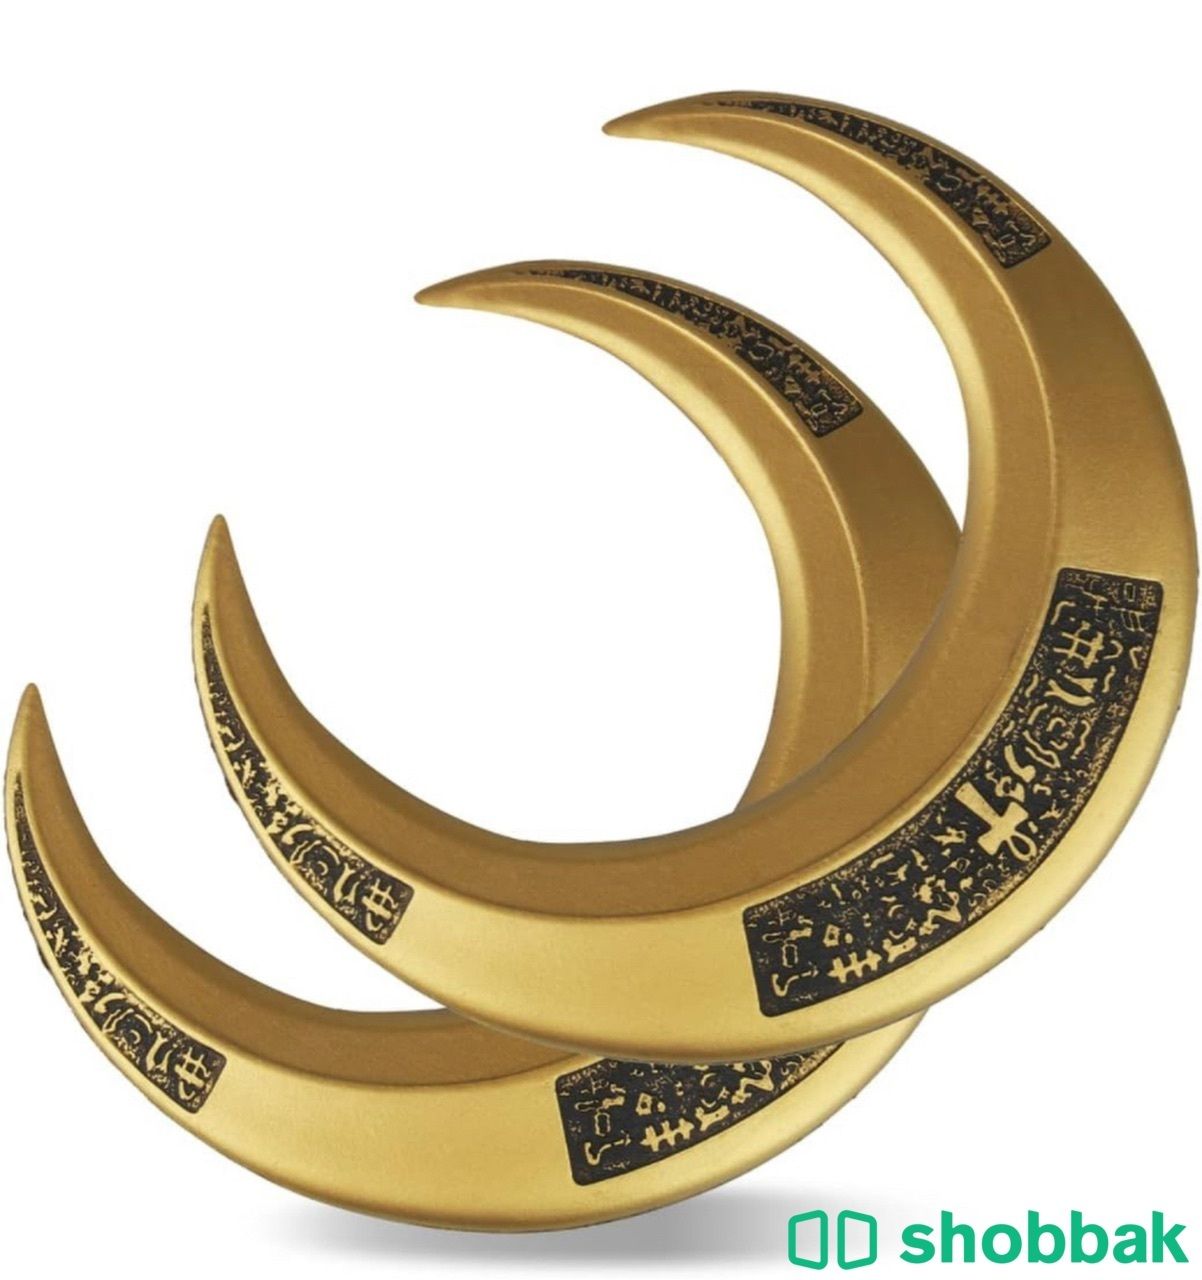 زي تنكري (moon knight) Shobbak Saudi Arabia